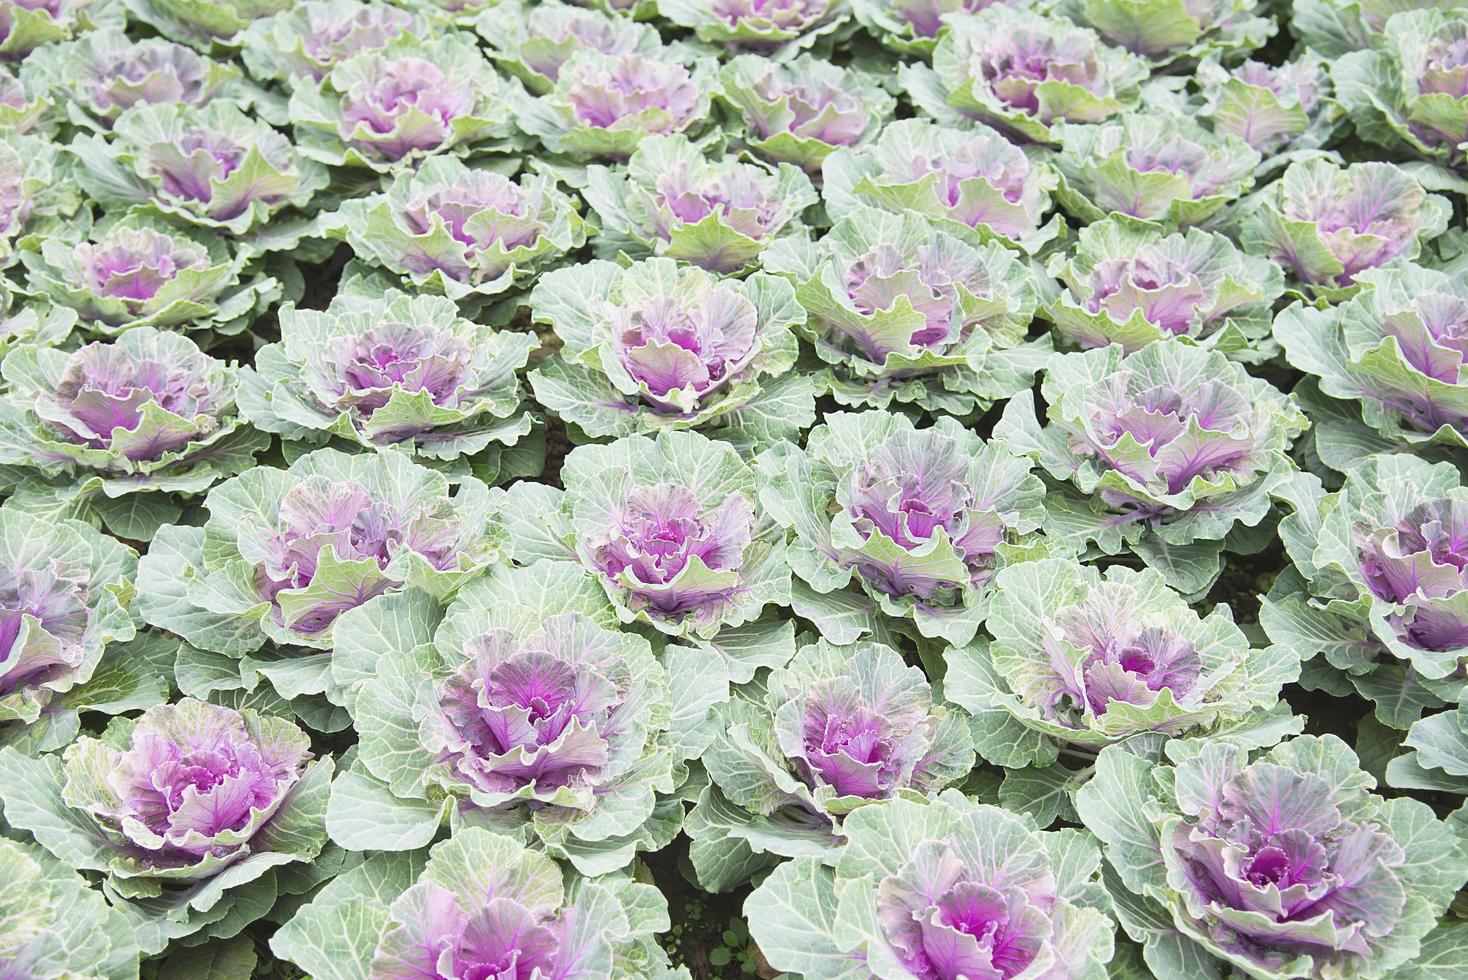 Ornamental Cabbage, Flowering Cabbage, Acephala Group Kale, or Brassica Oleracea photo